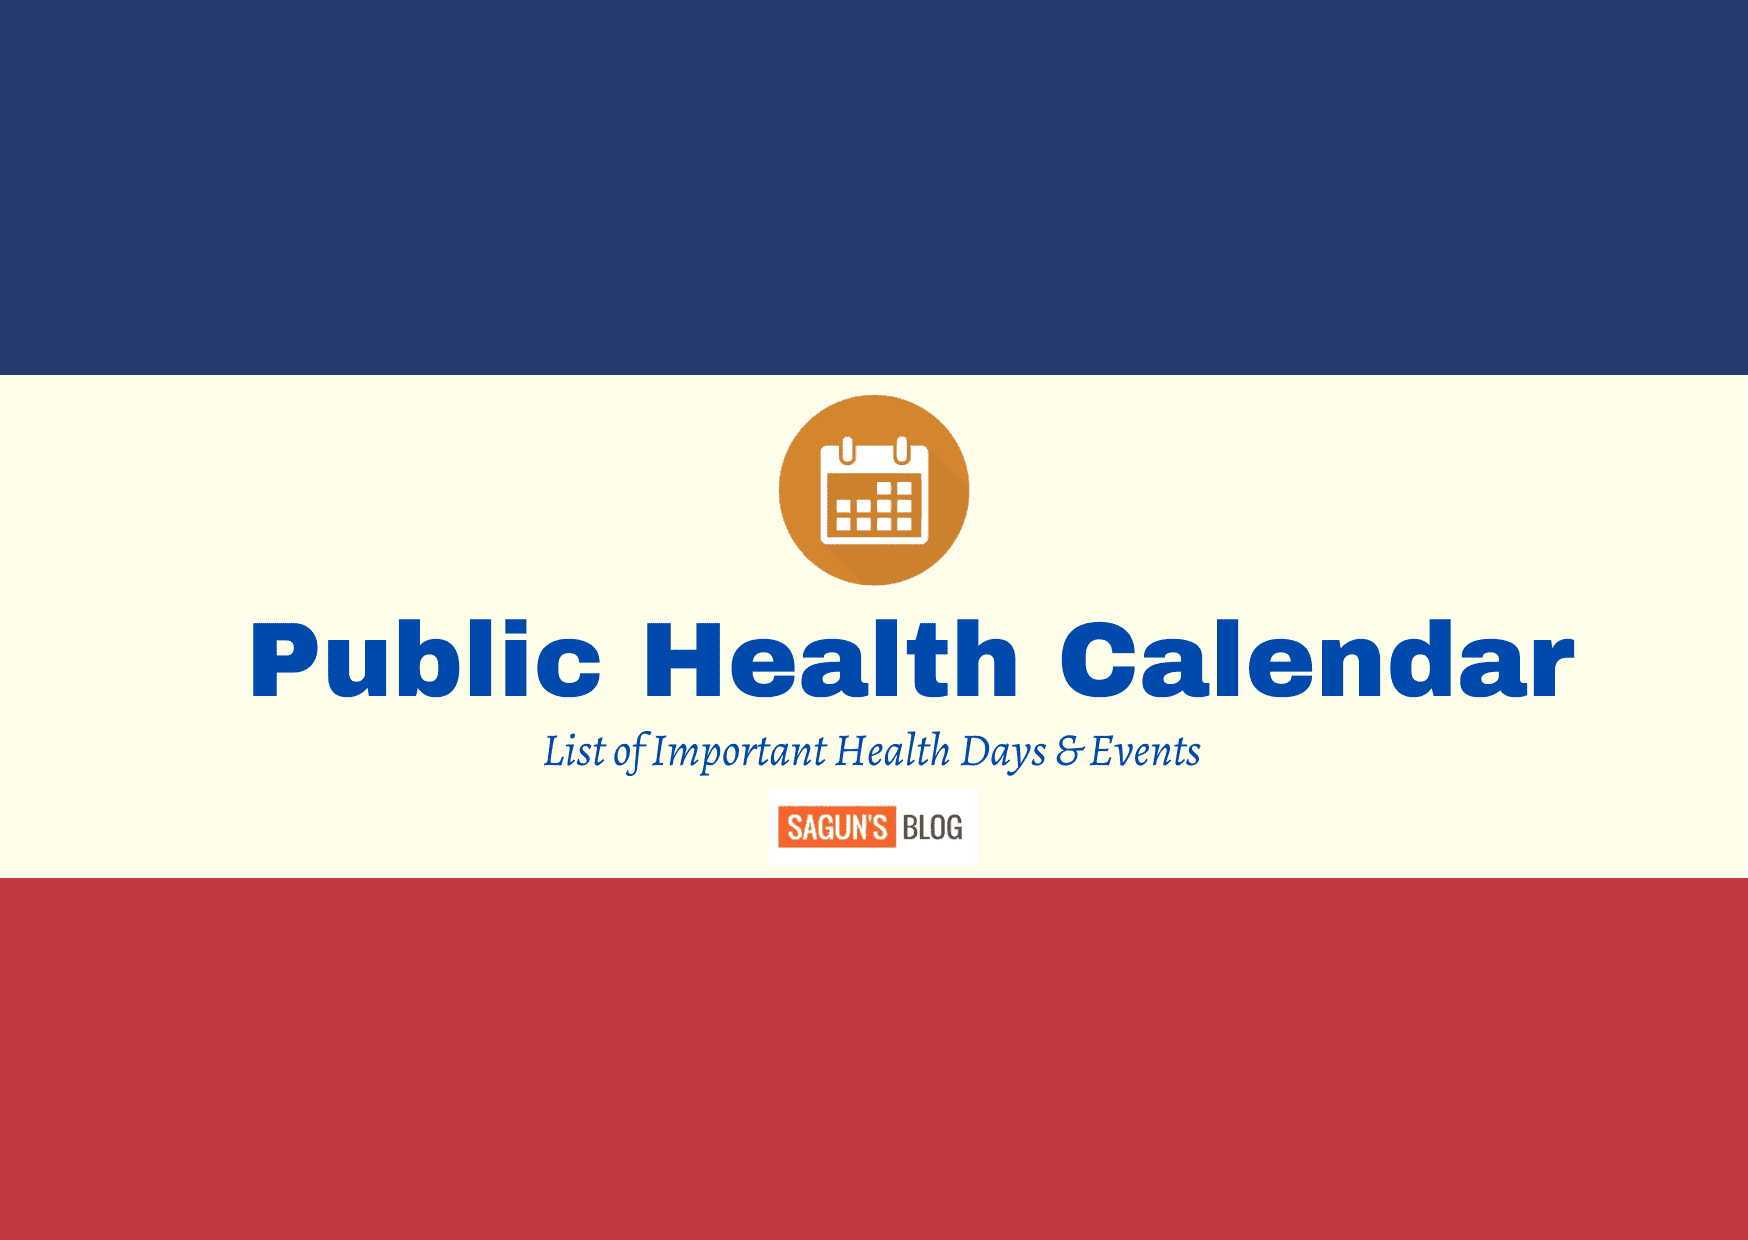 Public Health Calendar List of Important Health Days & Events